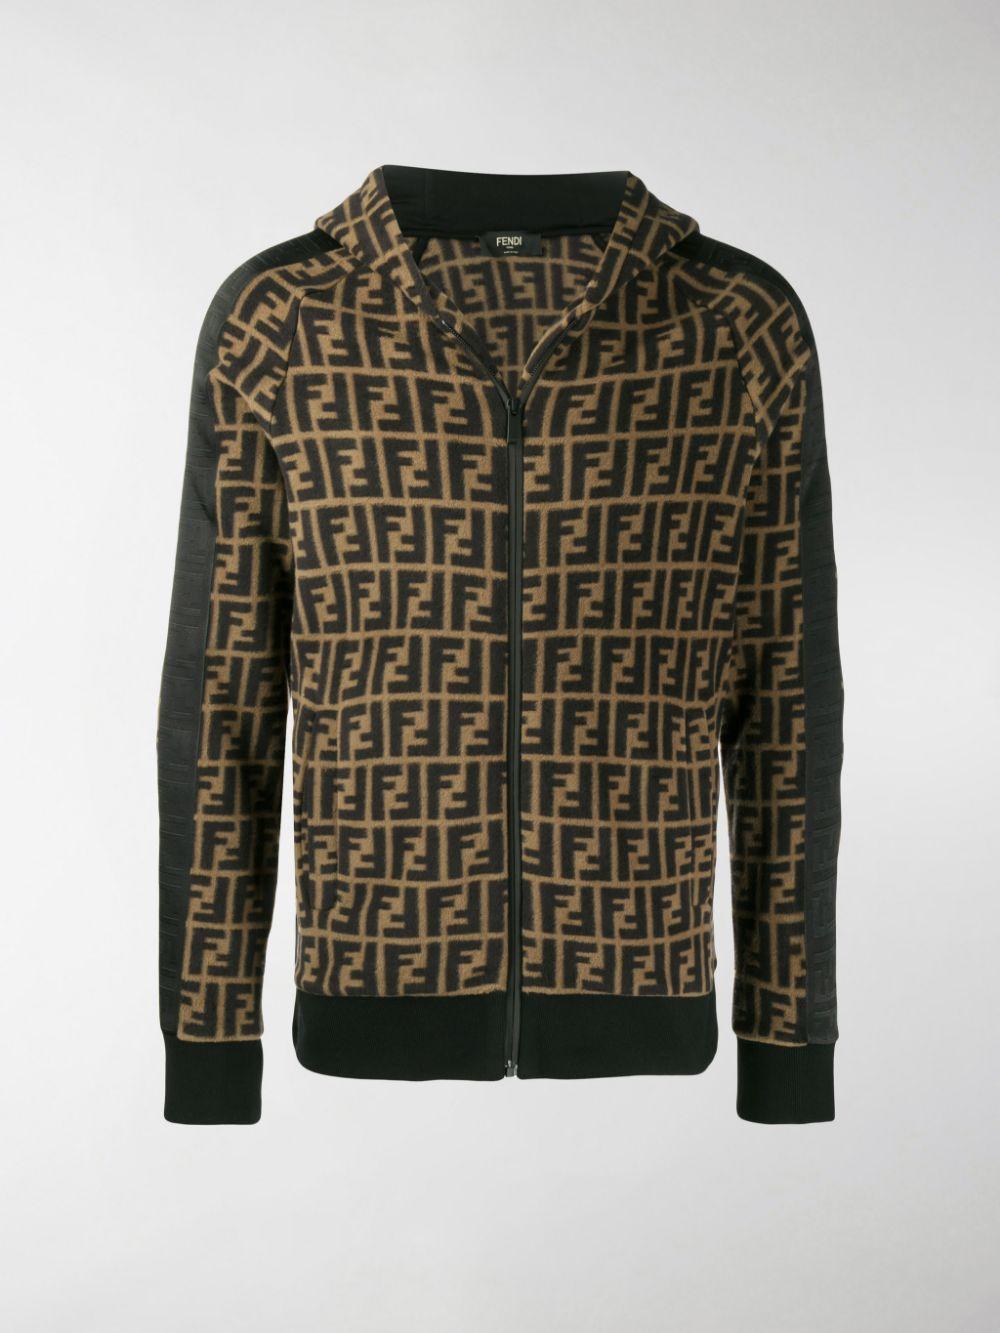 Fendi Cotton Ff Logo Zip-up Jacket in Brown for Men - Lyst